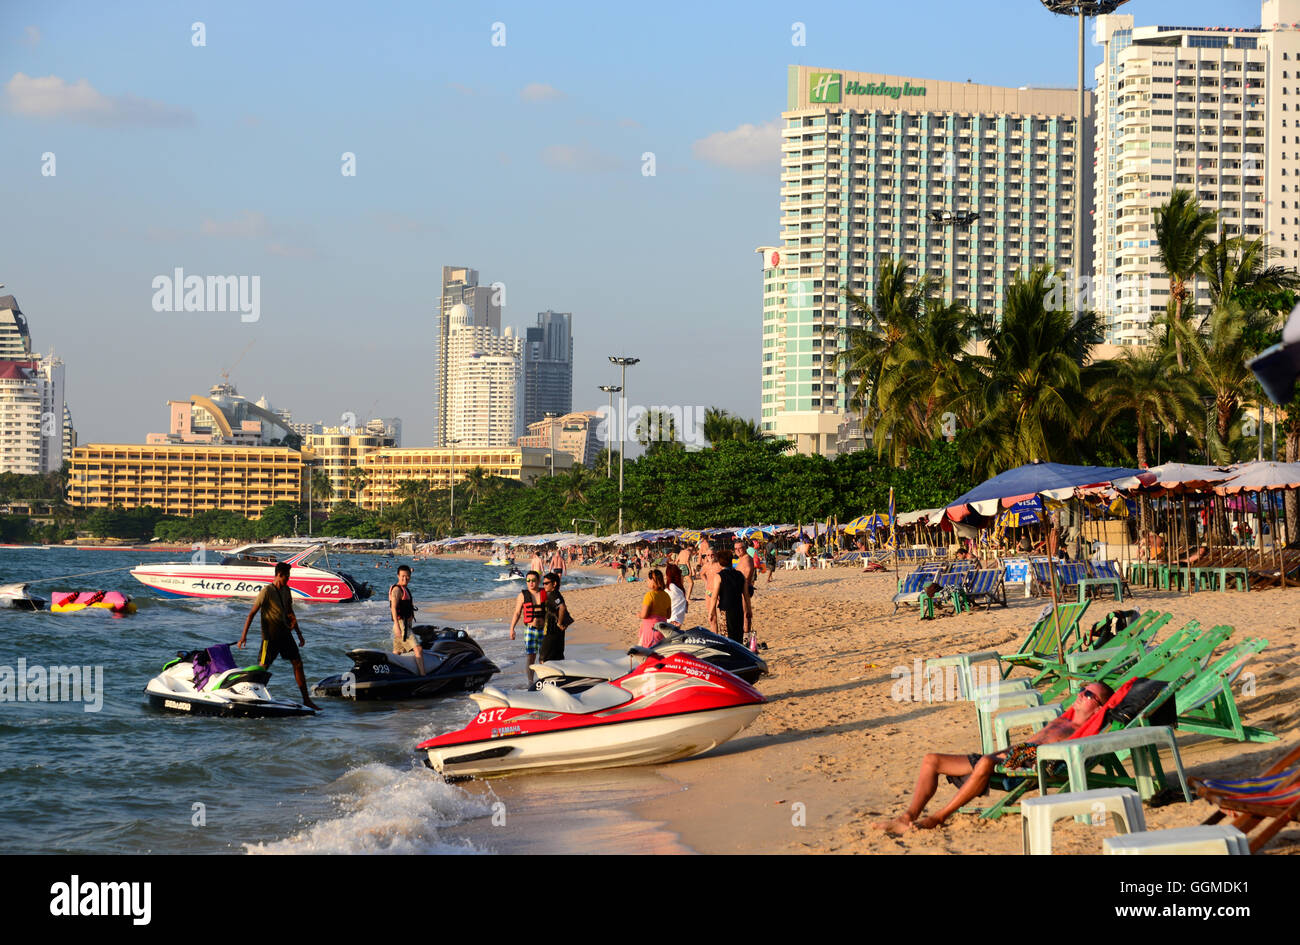 La ville de Pattaya Beach, Pattaya, Chon Buri, le Golf de Thaïlande, Thaïlande Banque D'Images